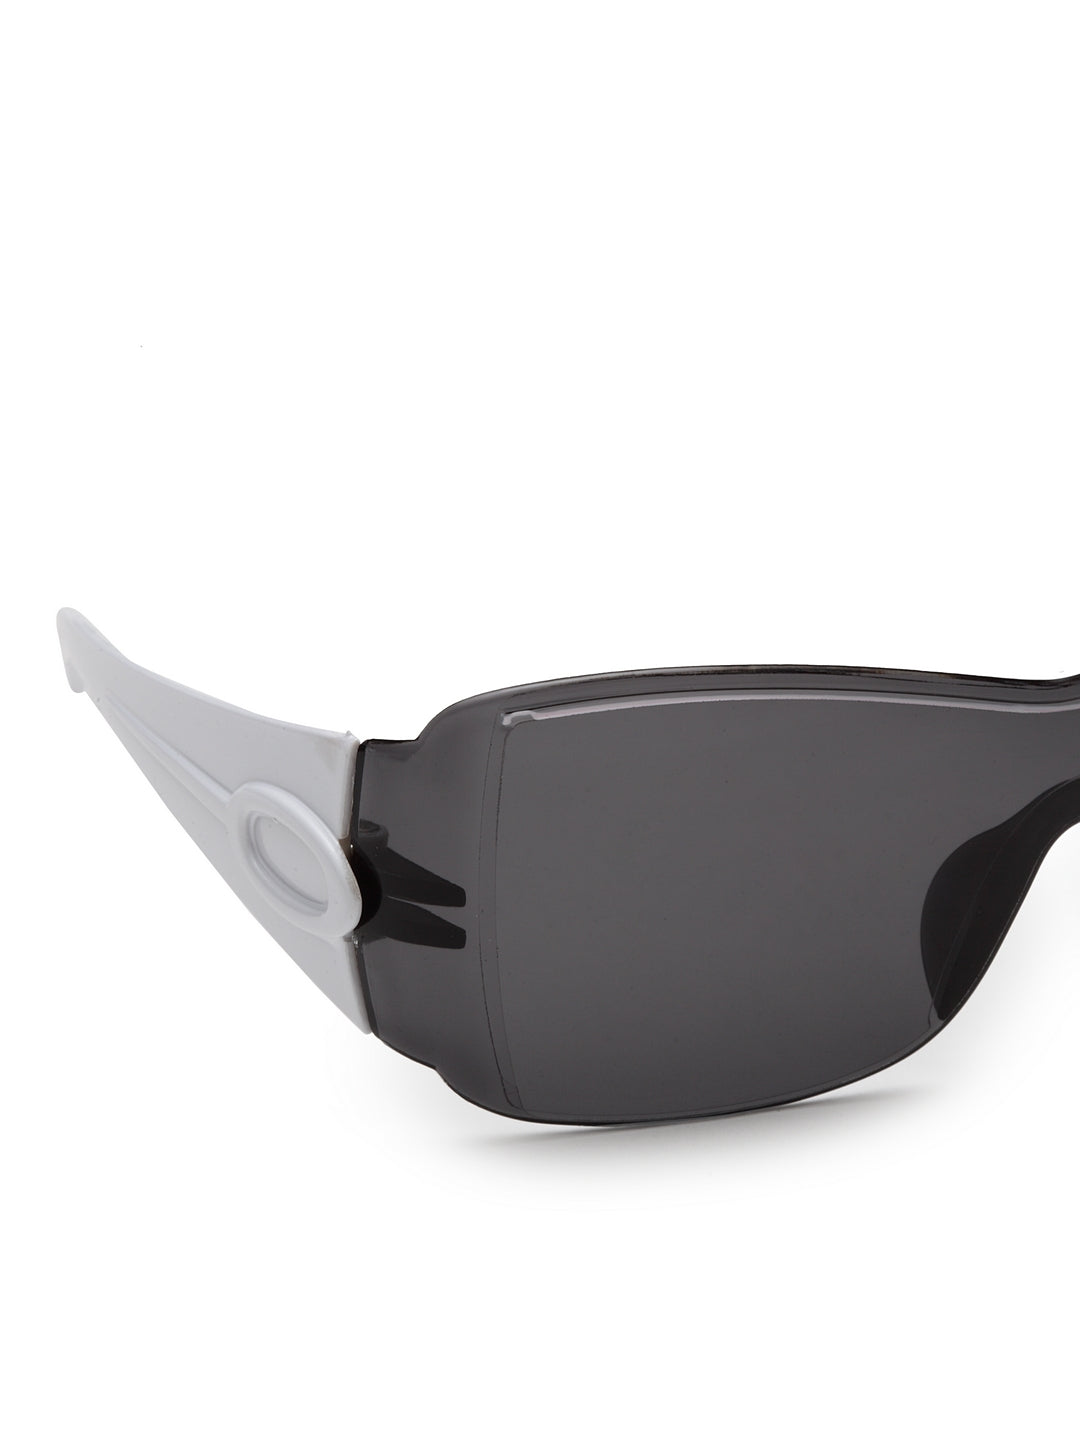 Stol'n Premium Attractive Fashionable UV-Protected Sports Sunglasses - Black